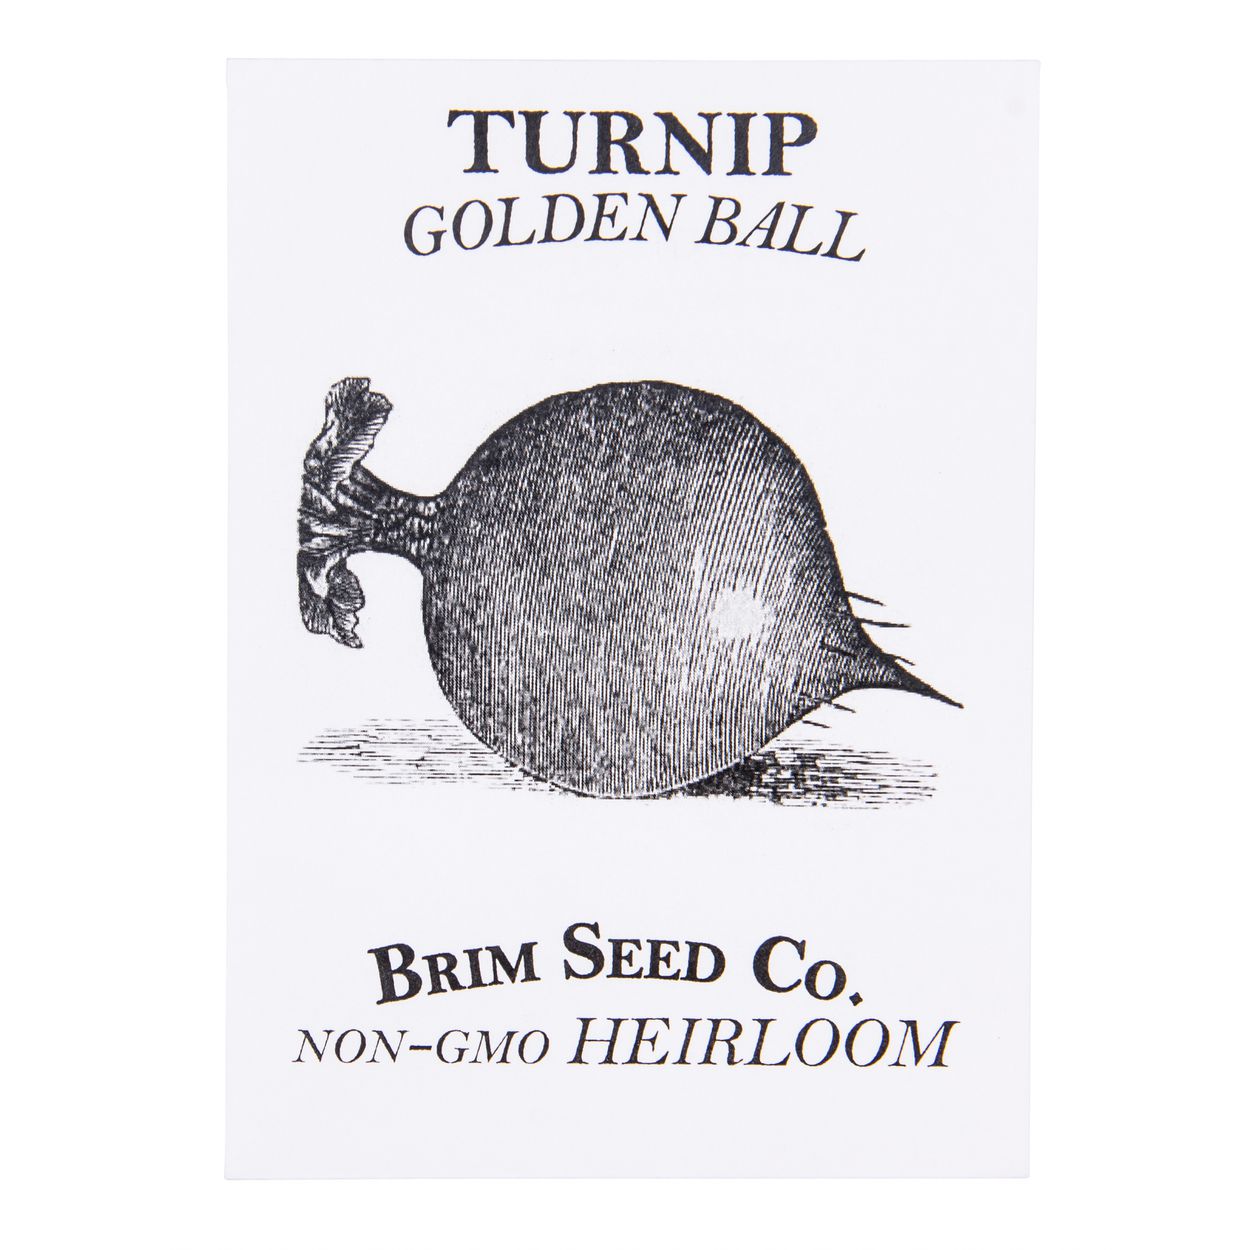 Brim Seed Co. - Golden Ball Turnip Heirloom Seed